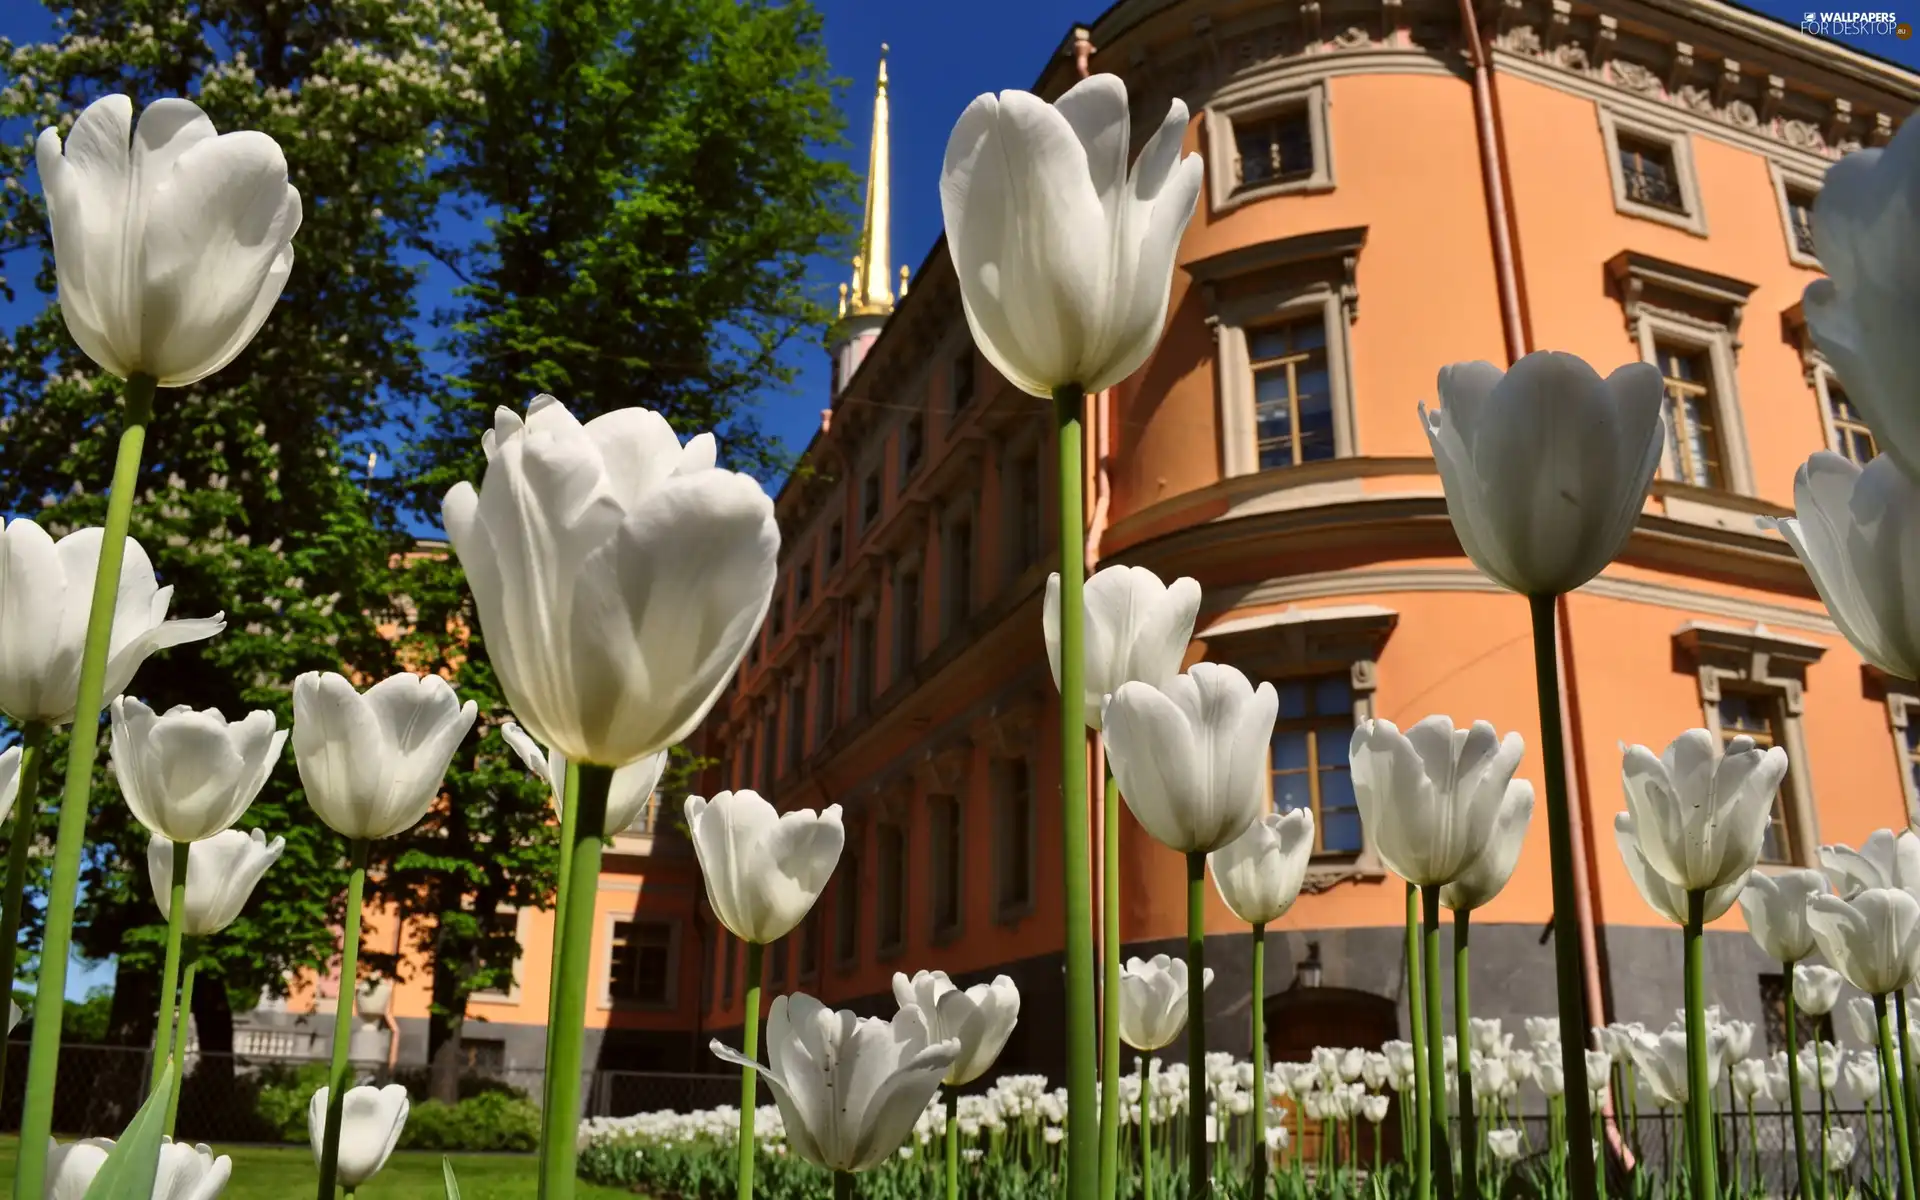 House, White, Tulips